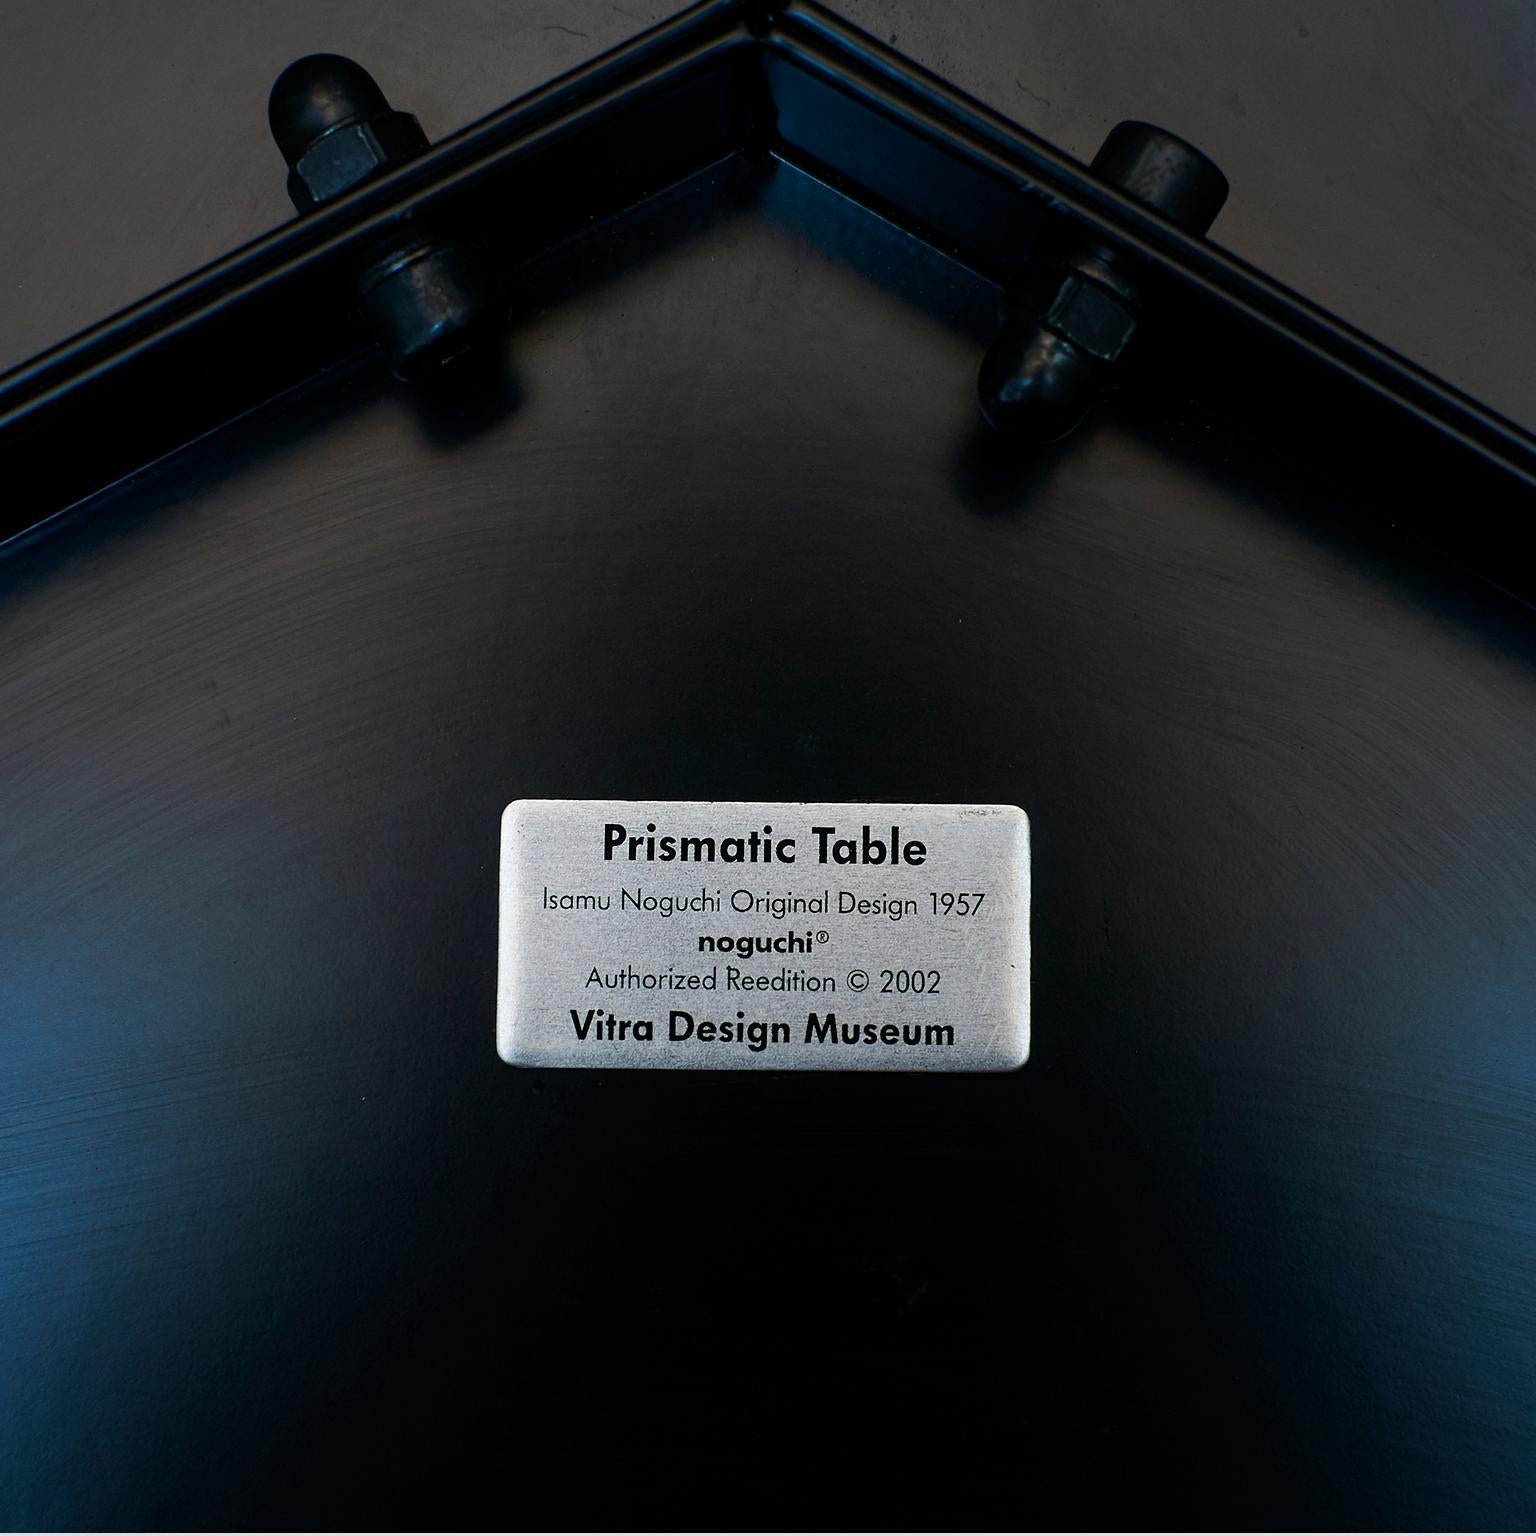 Swiss Prismatic Table by Isamu Noguchi